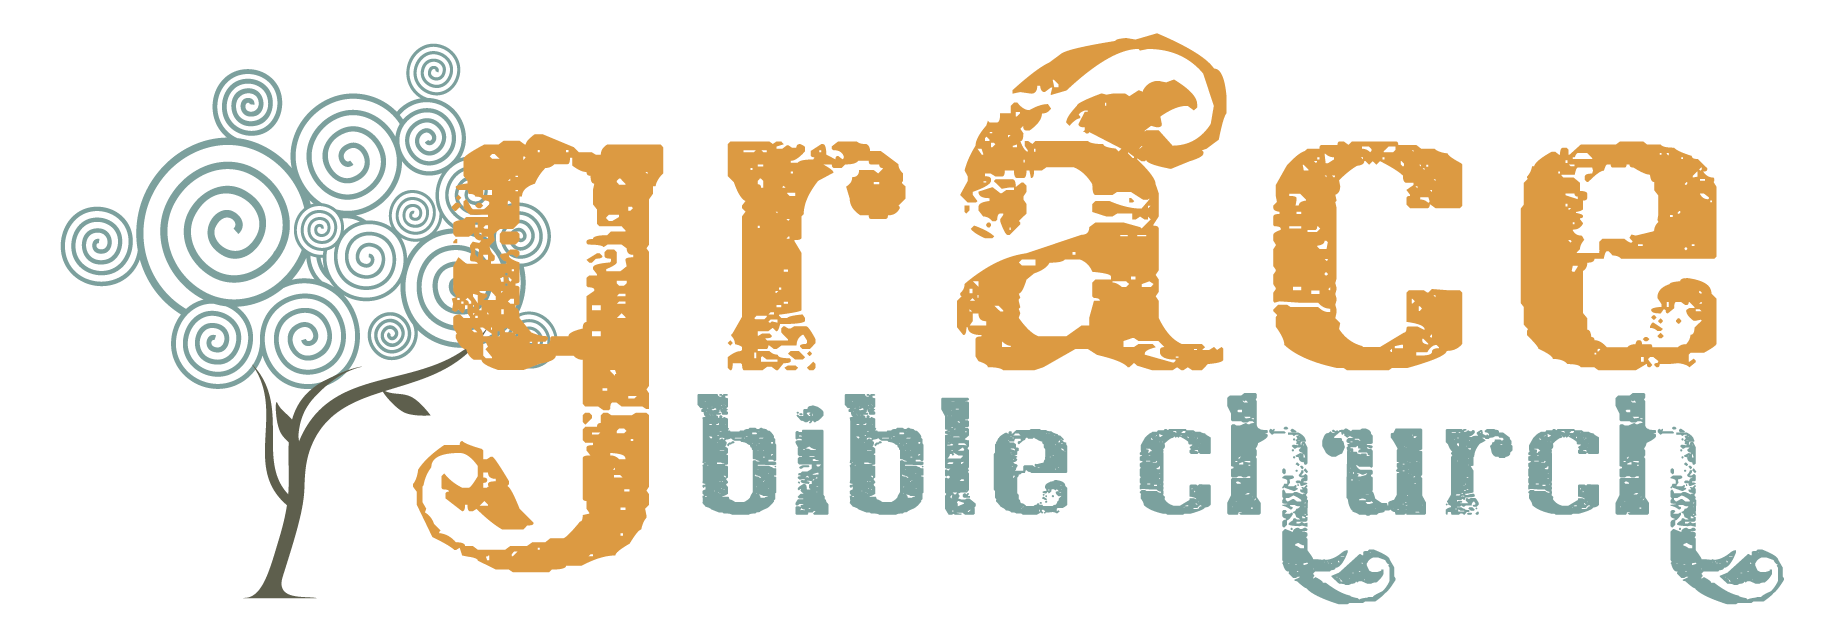 Grace Bible Church Logo